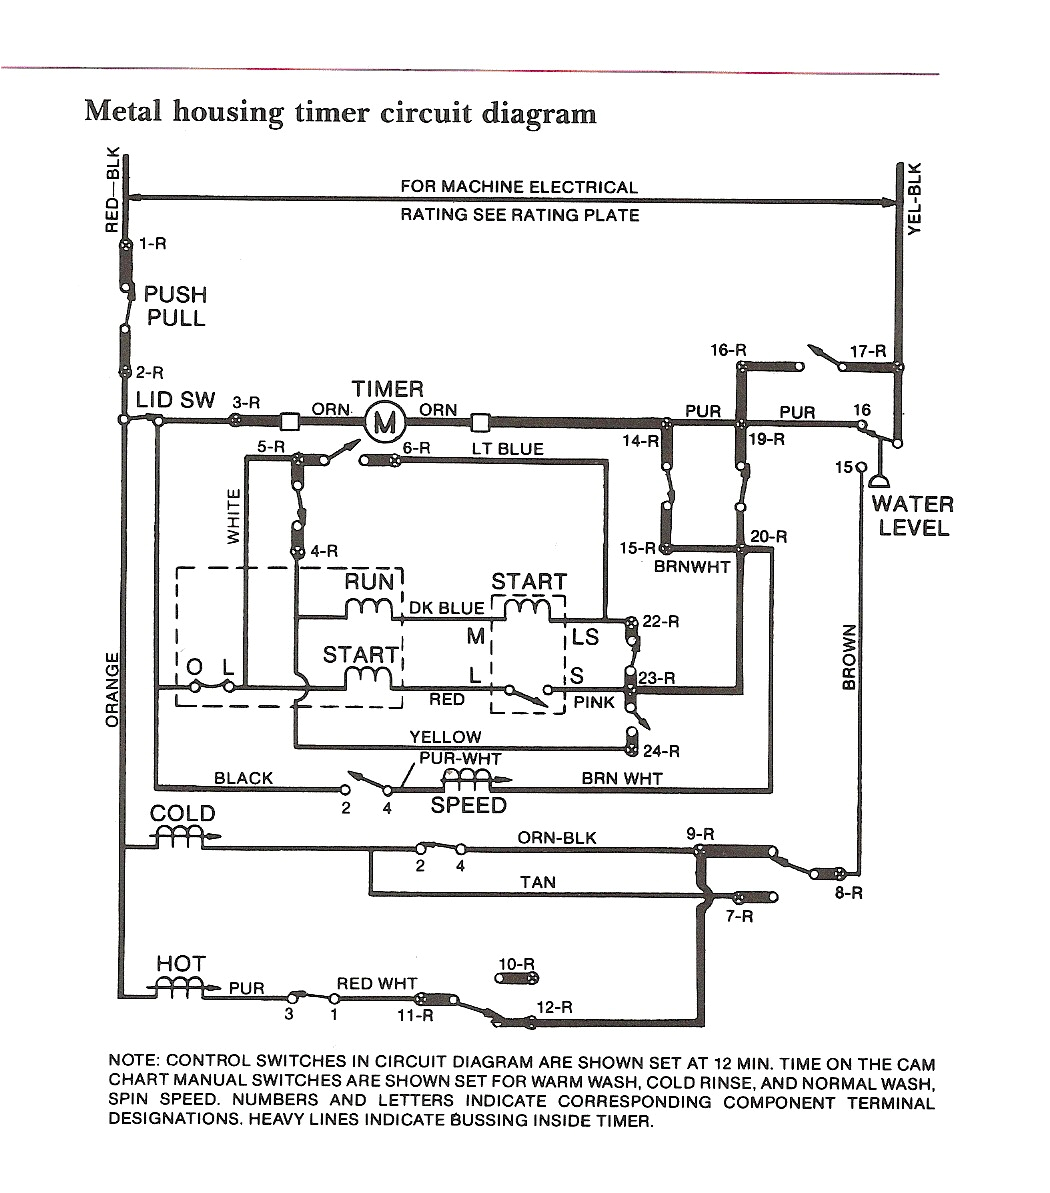 120v washer wire diagram wiring diagram inside 120v washer wire diagram